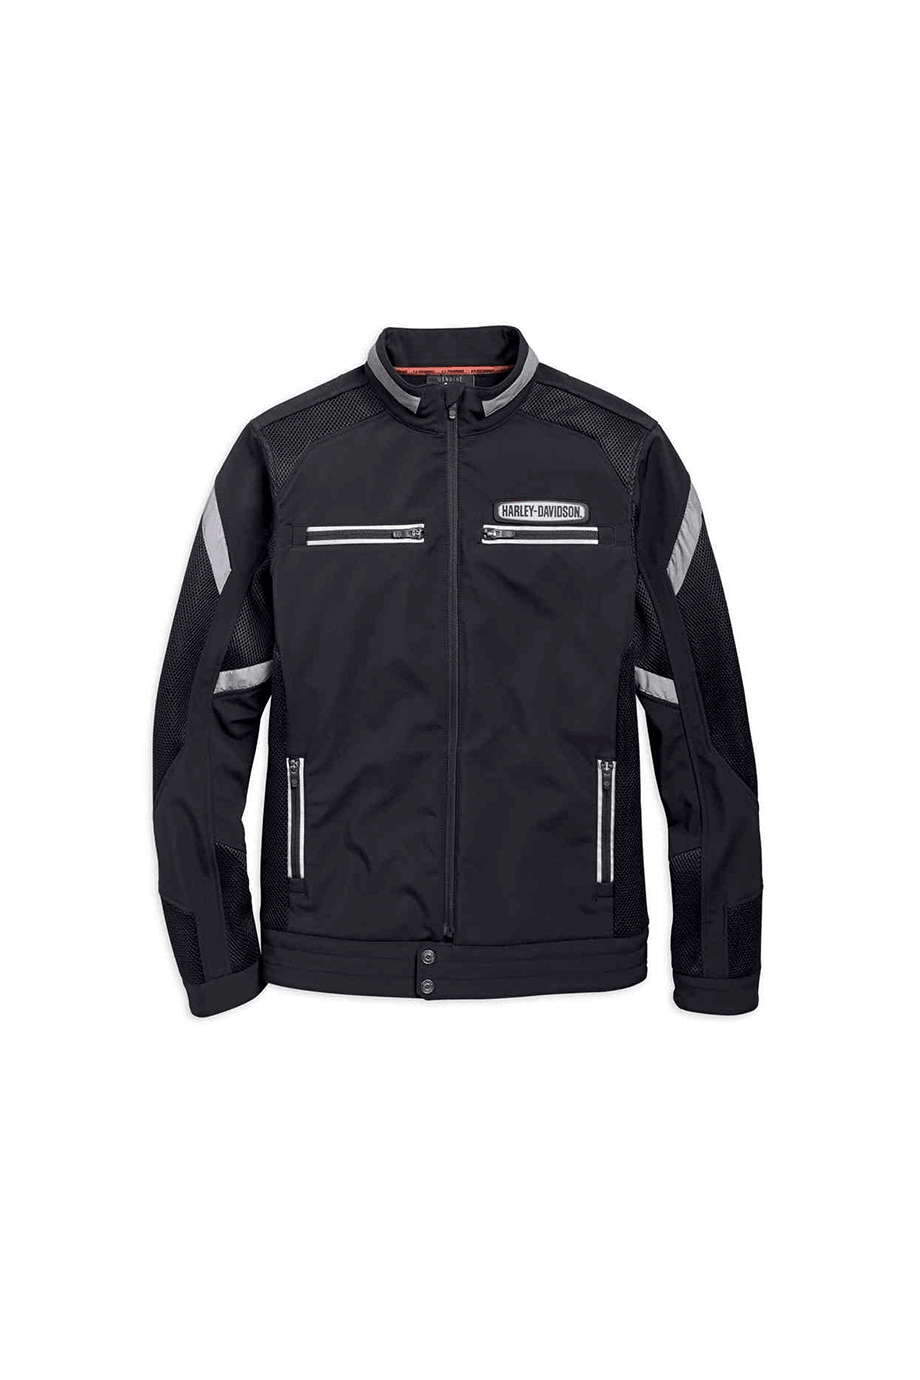 Harley-Davidson® Men's Performance Soft Shell & Mesh Jacket